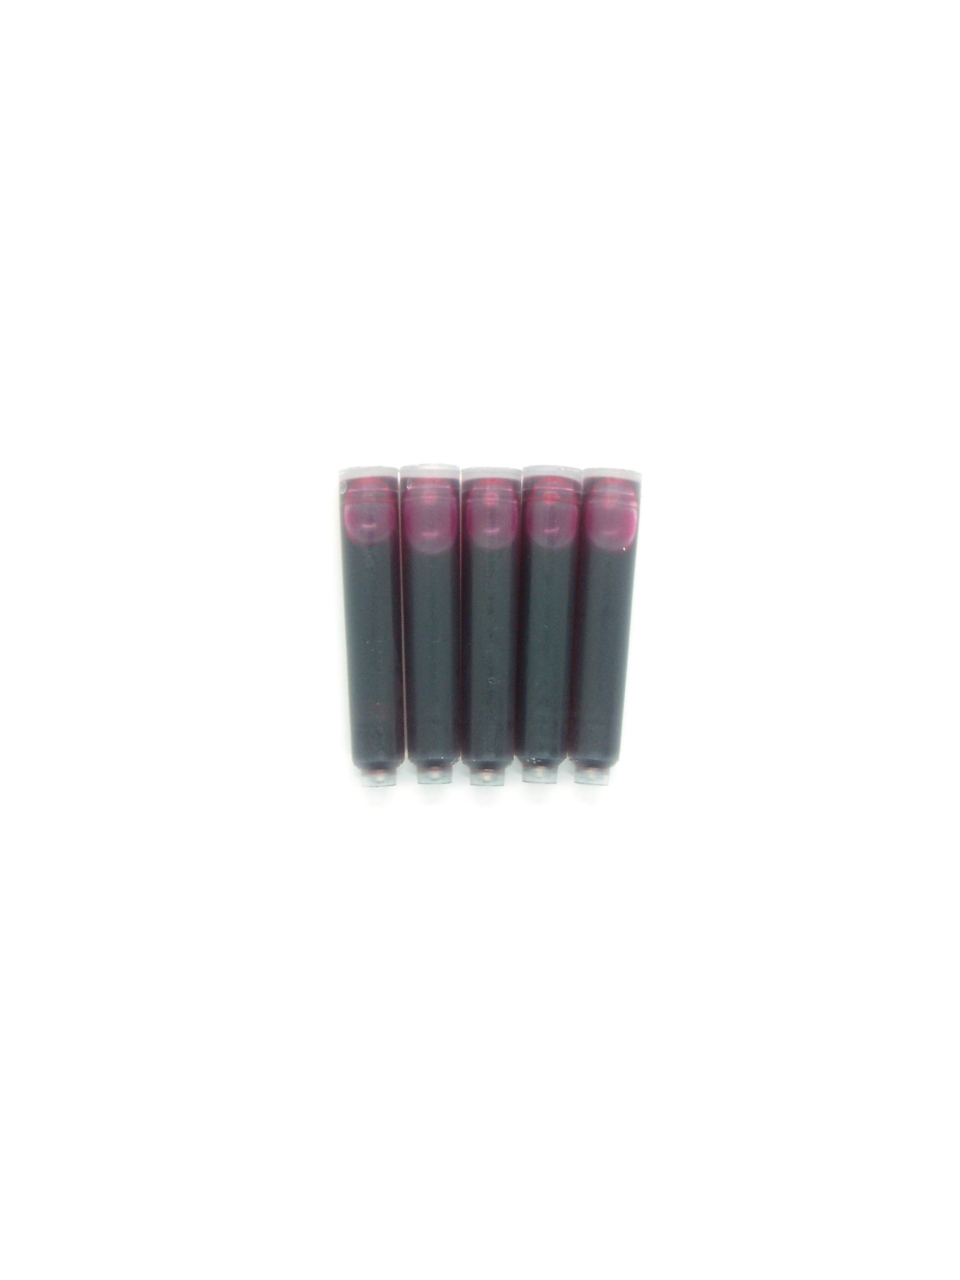 PenConverter Ink Cartridges For Ducati Fountain Pens (Pink)